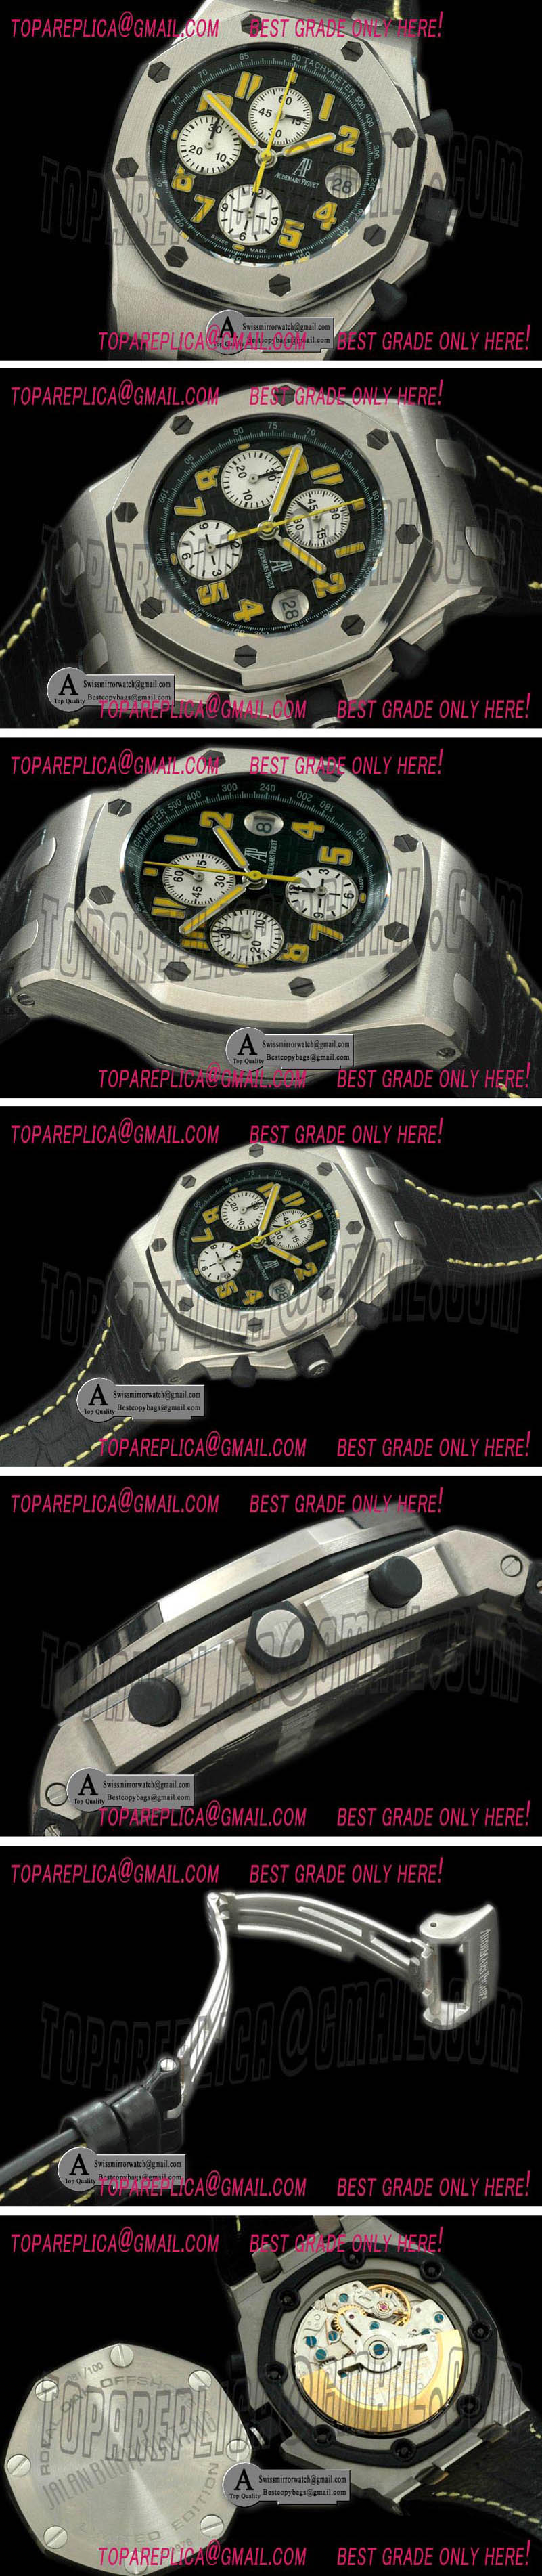 Audemars Piguet 26115TI.OO.D002CR.01 Royal Oak Chronograph SS/Leather Black A-7750 Replica Watches